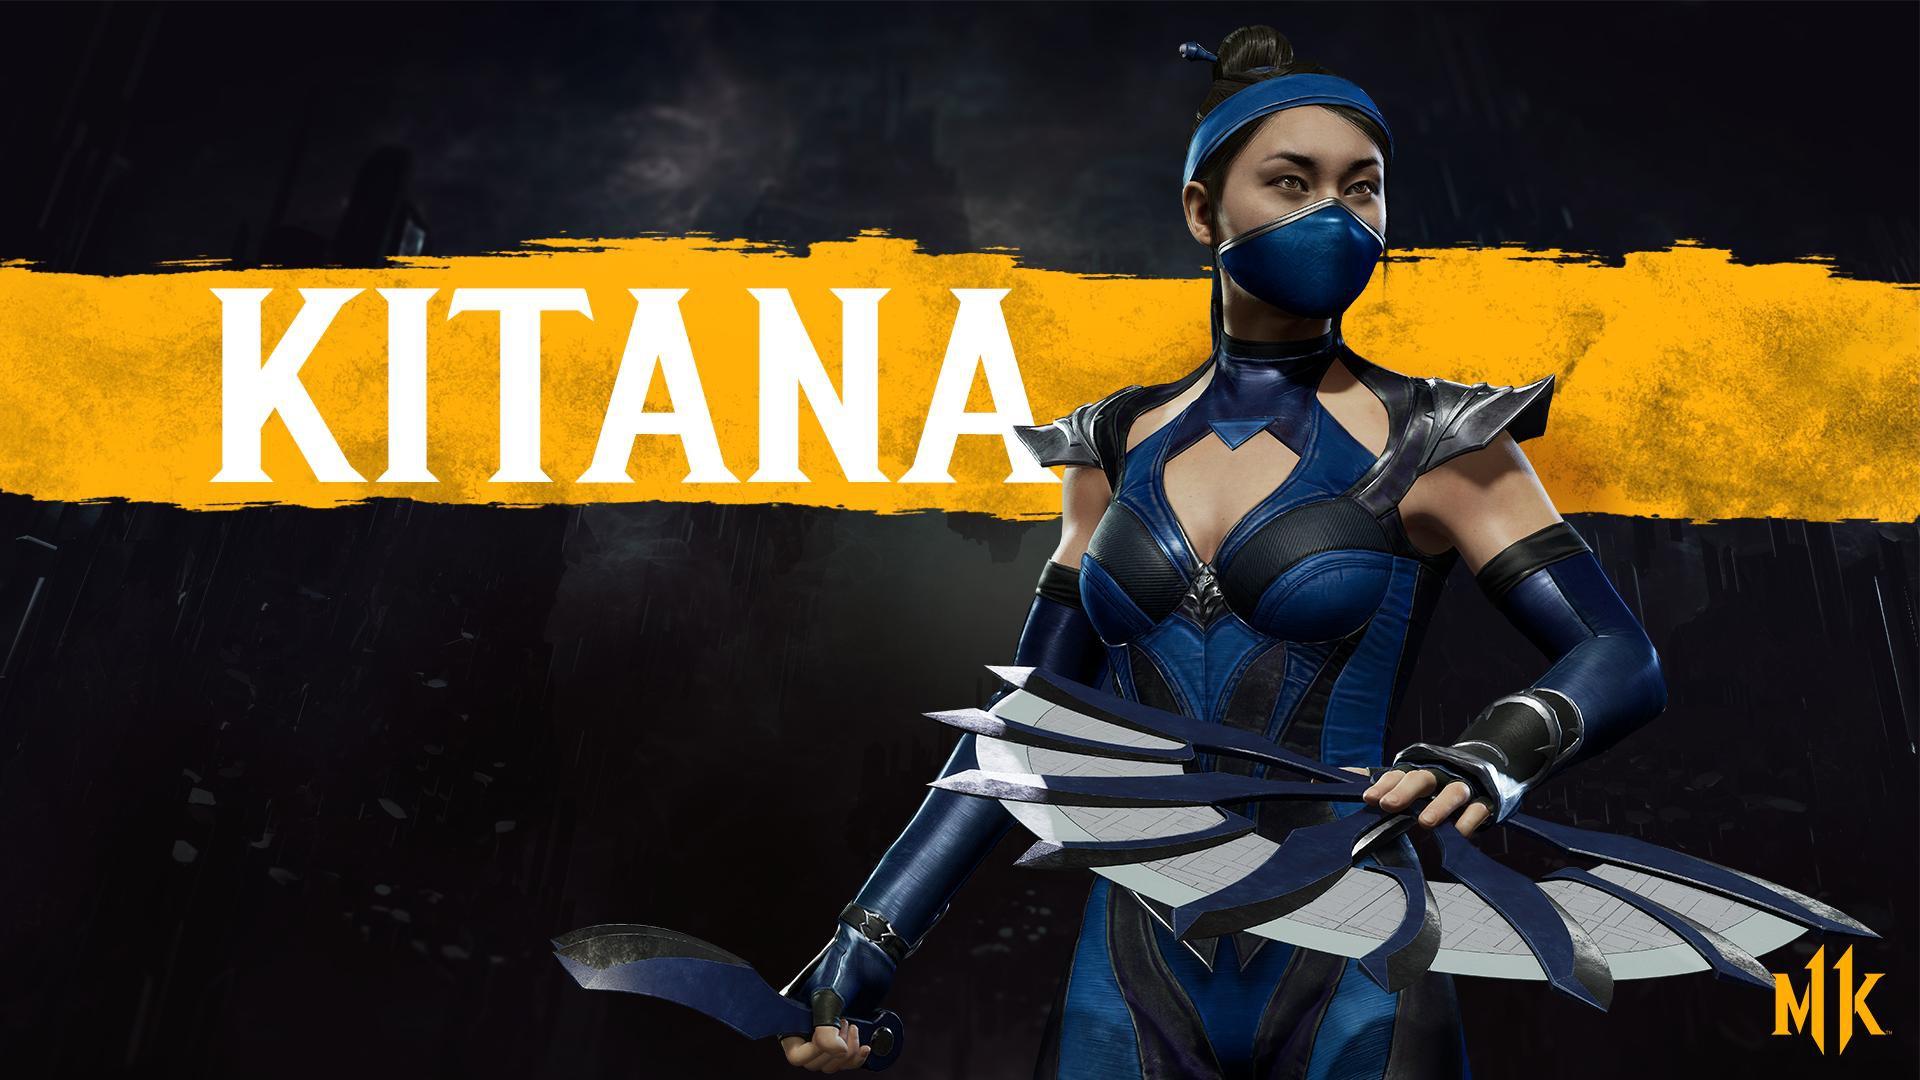 Wallpaper of Kitana, Mortal Kombat, Mortal Kombat 11 background & HD